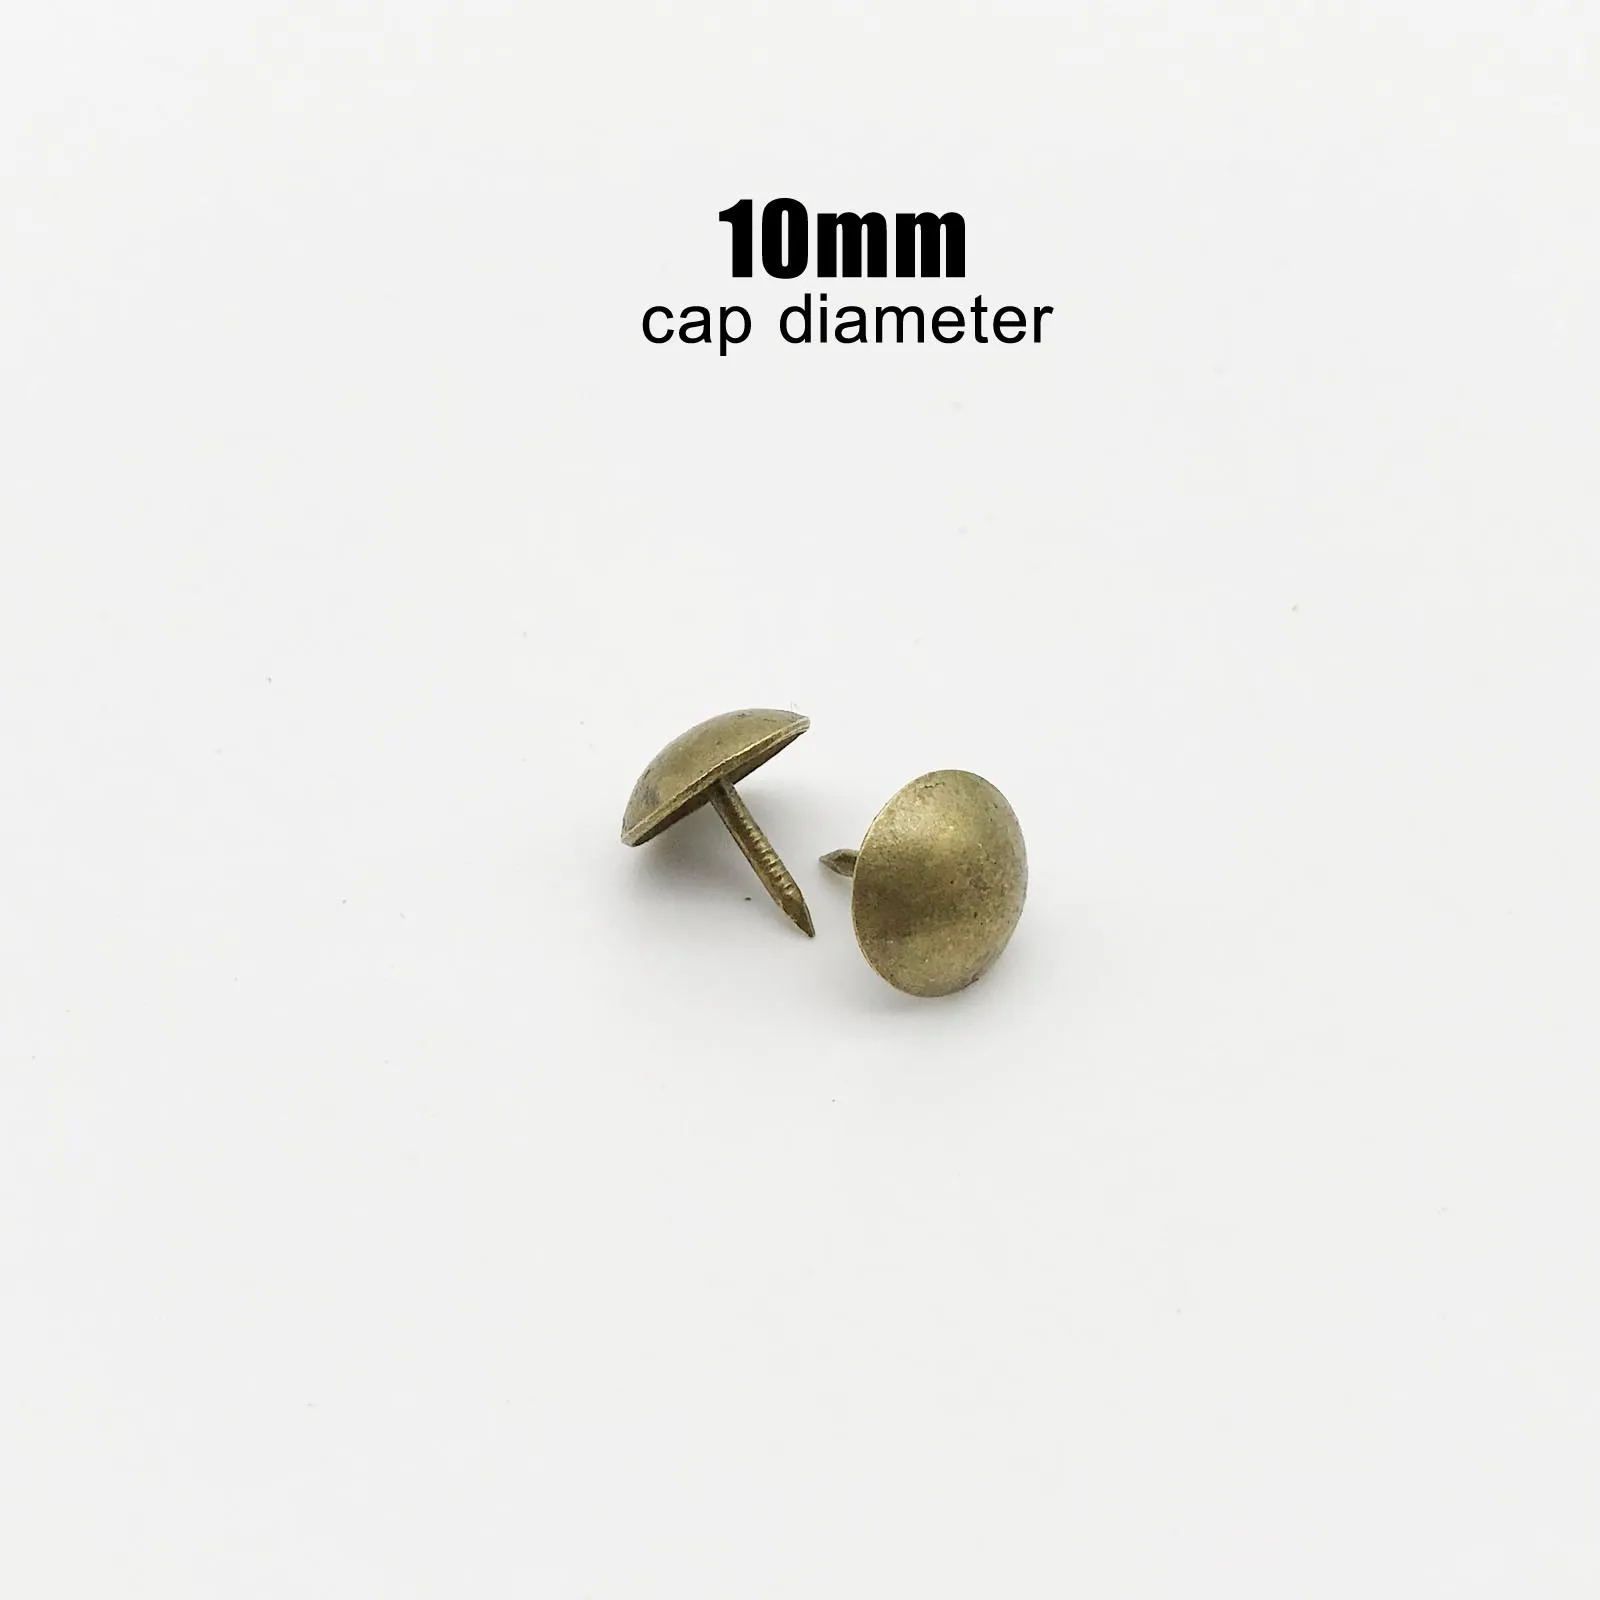 cap diameter 10mm